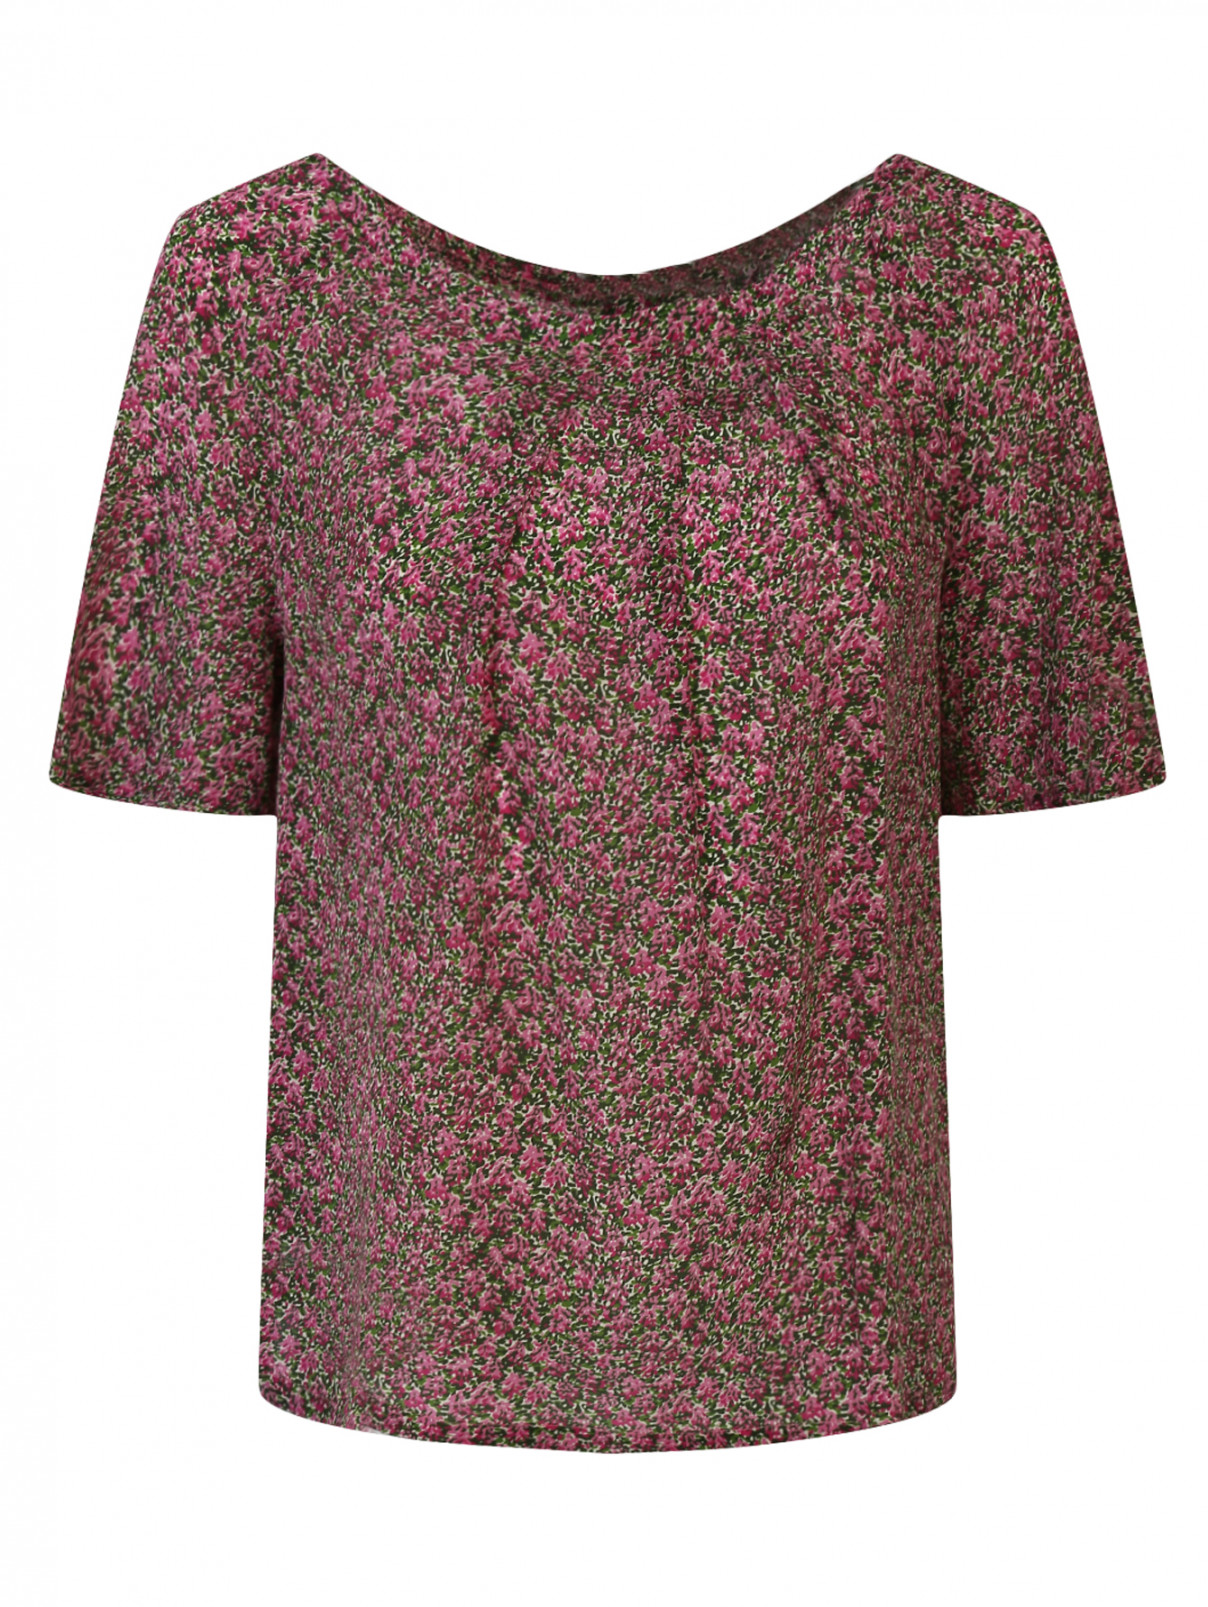 Блуза из шелка с узором и короткими рукавами Weekend Max Mara  –  Общий вид  – Цвет:  Розовый